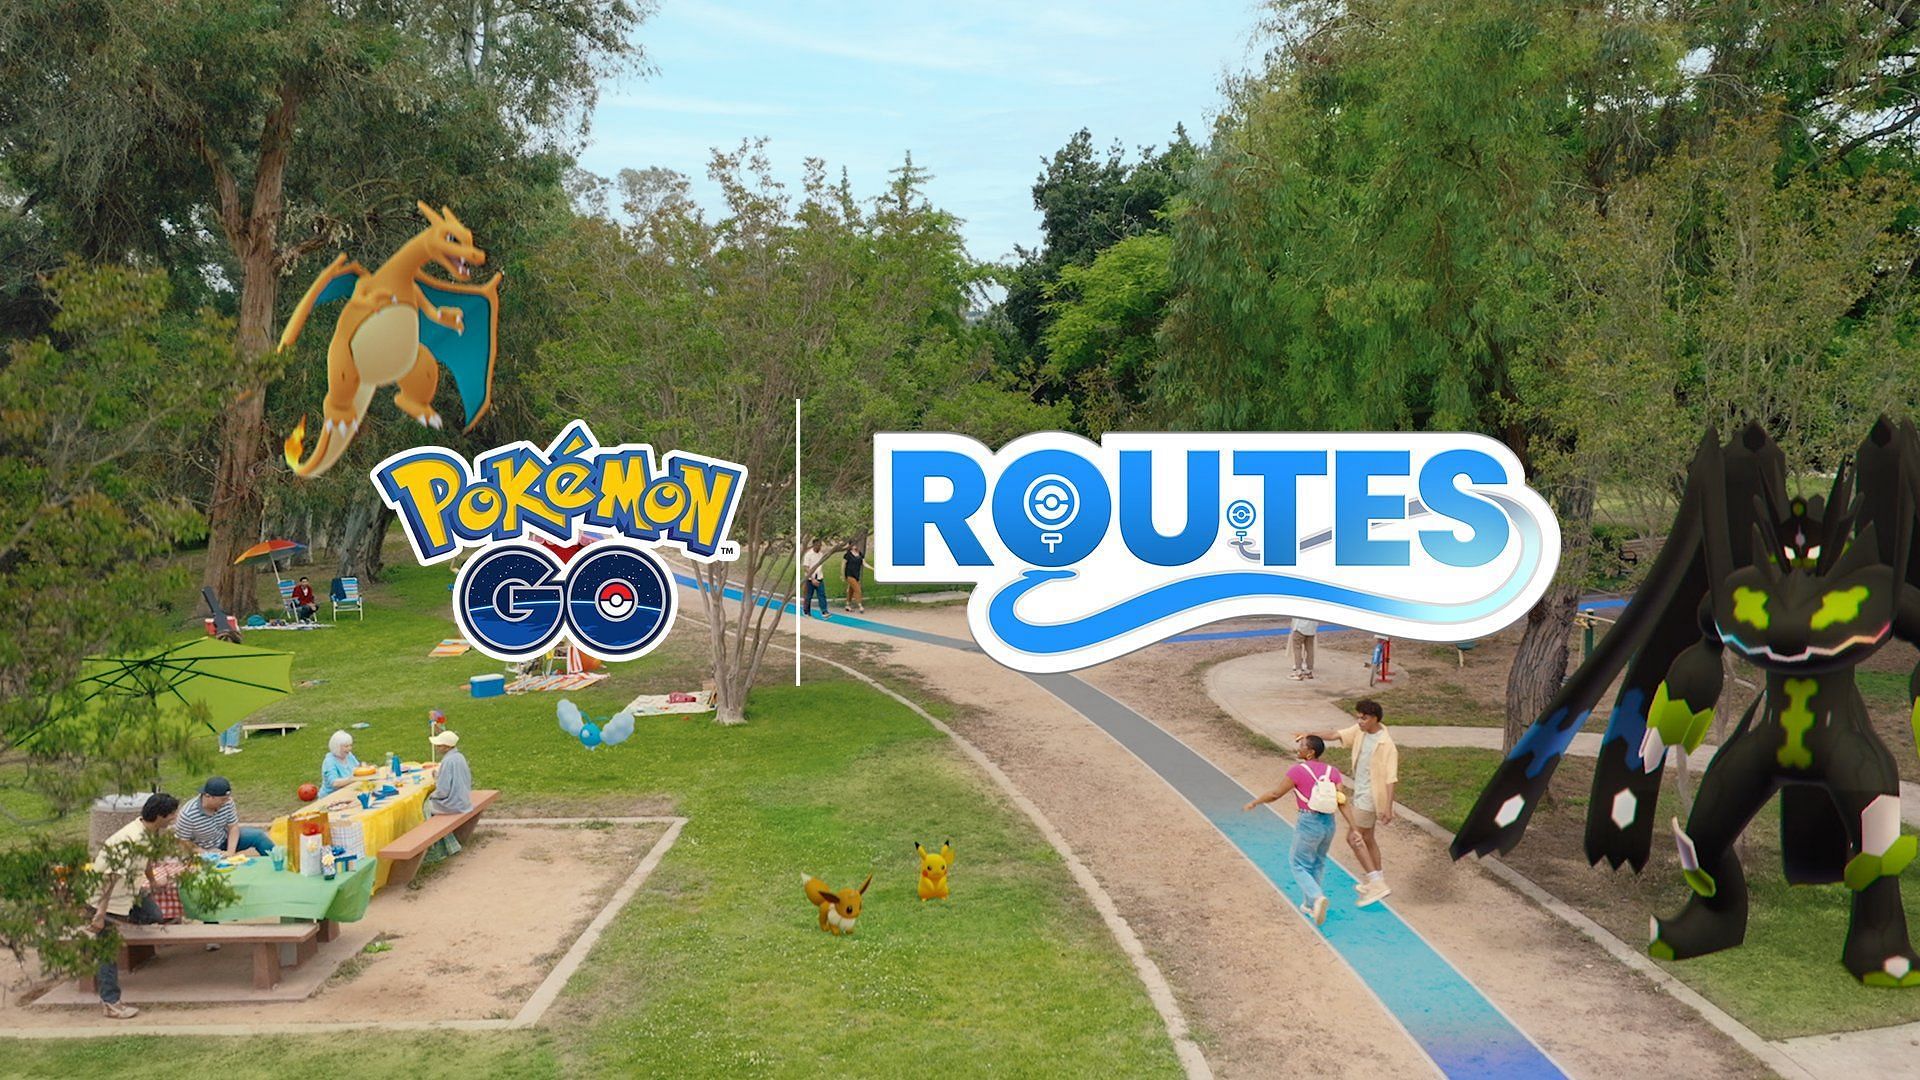 Pokemon GO logo and Routes logo with park background